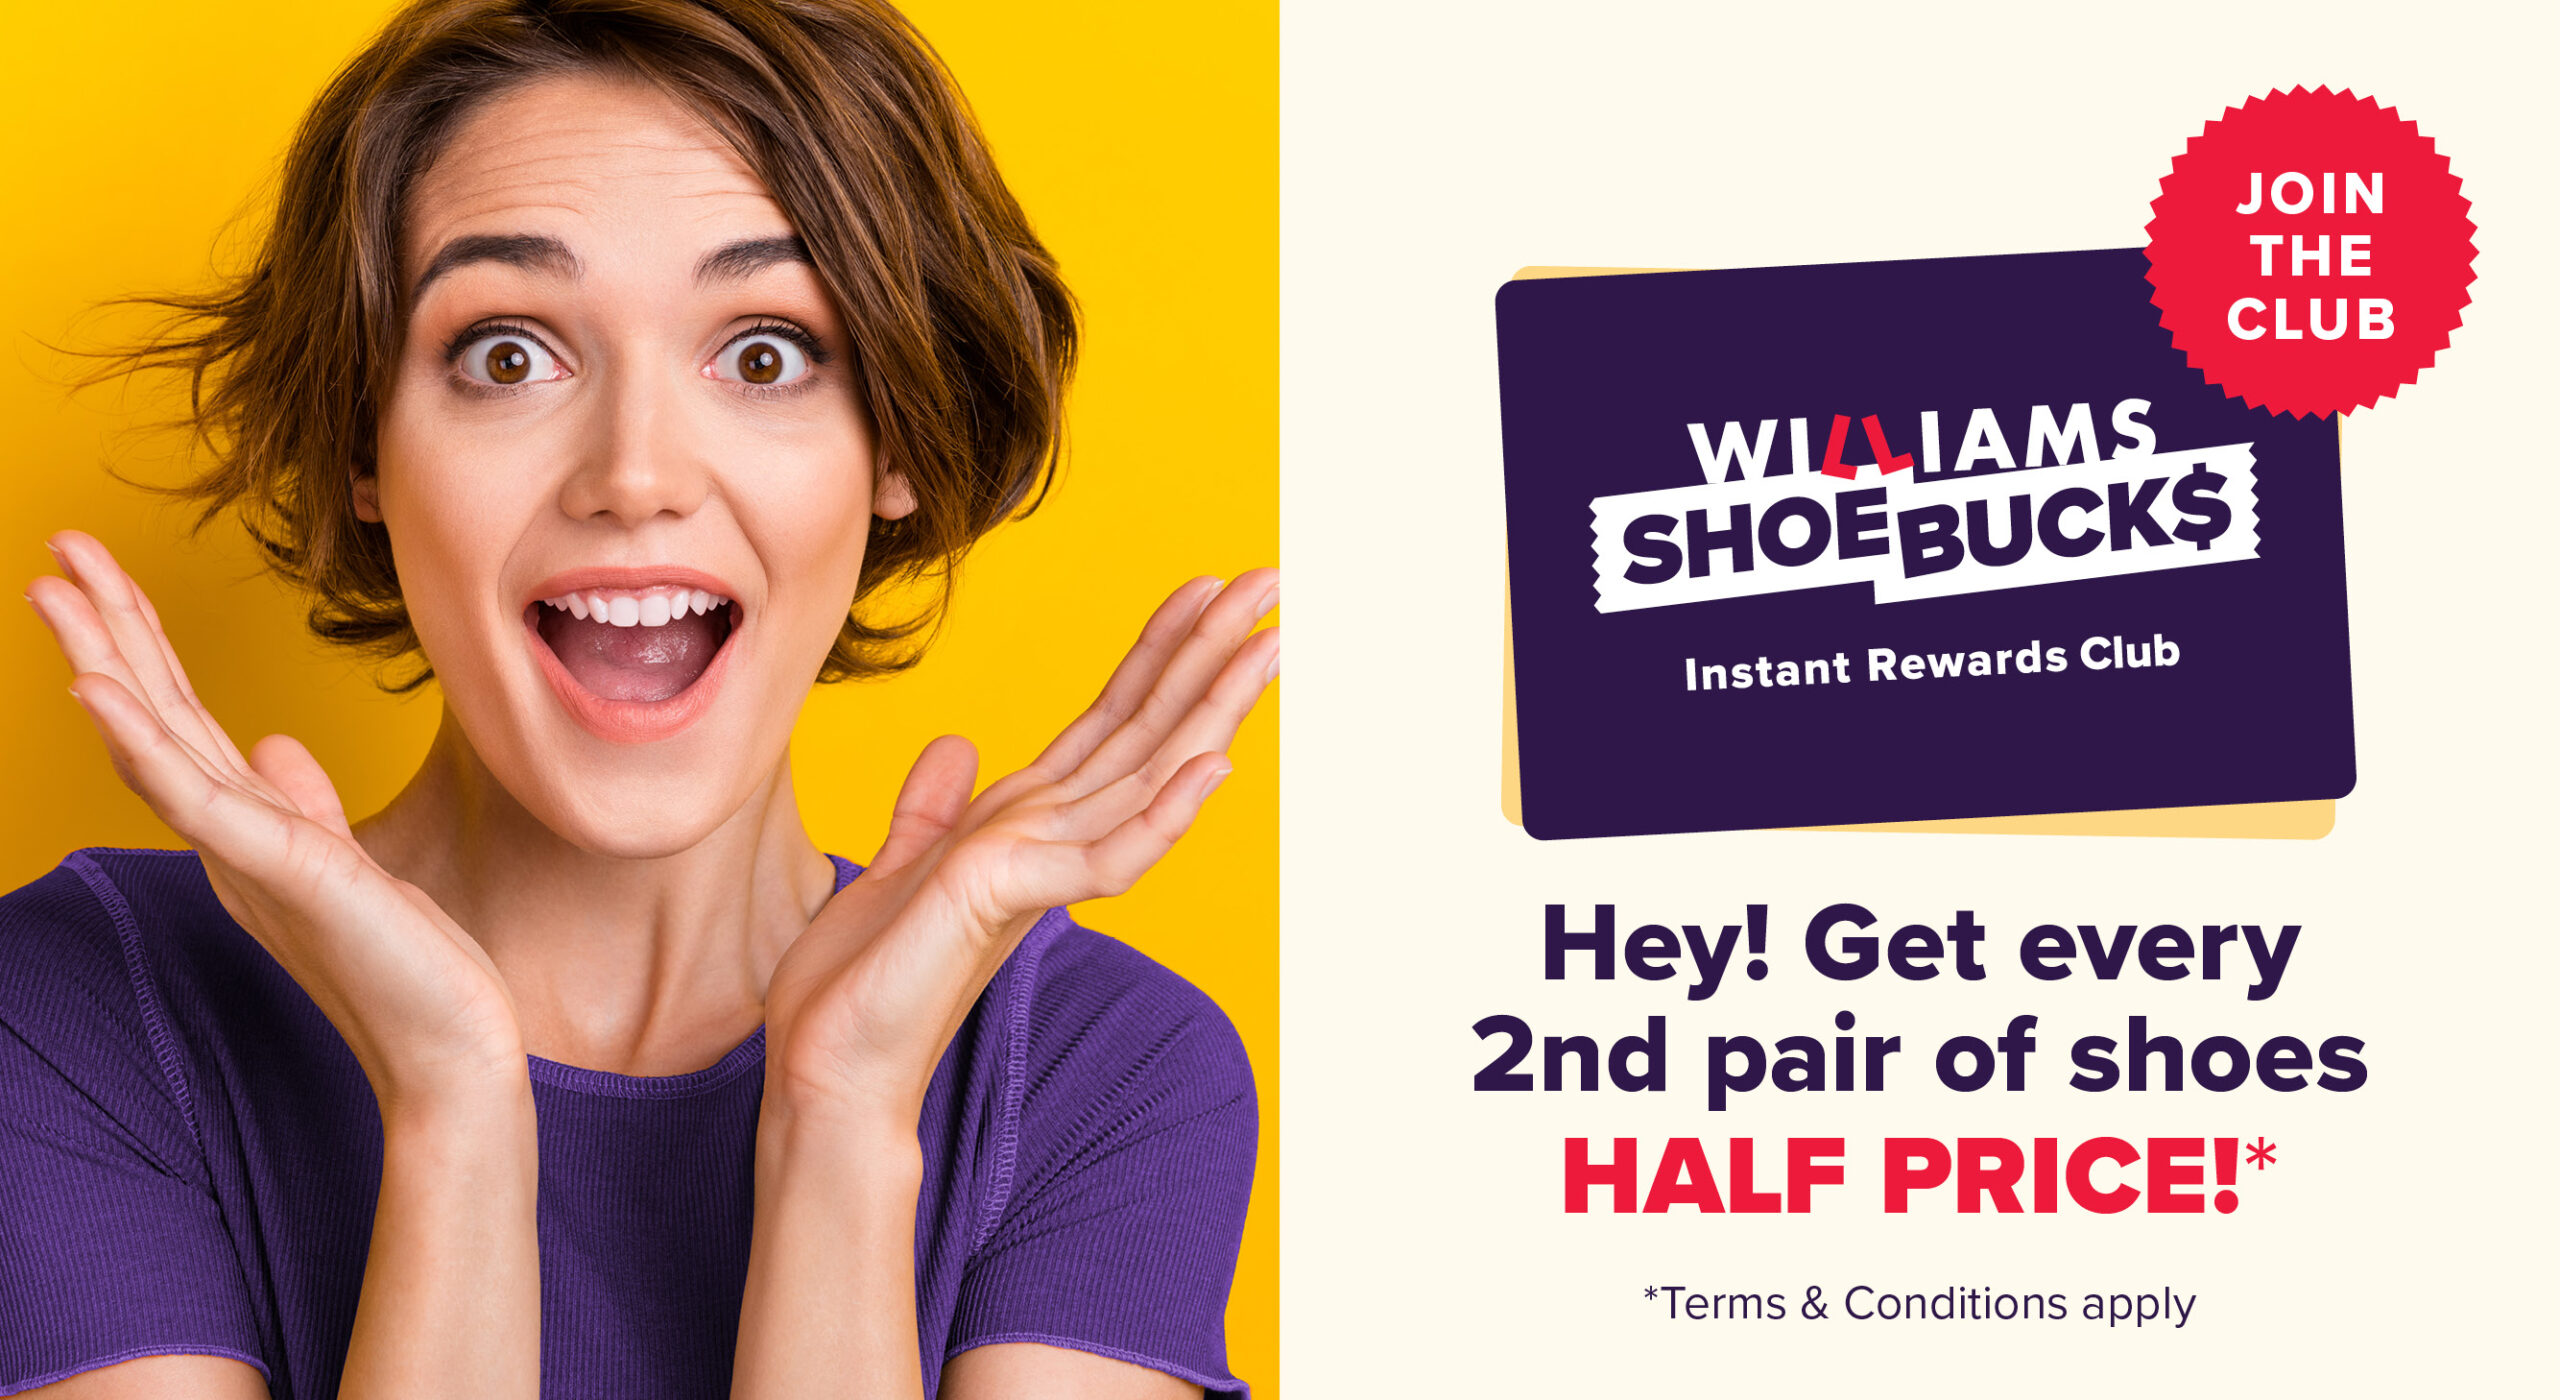 Williams Shoebucks Instant Rewards Club is here! Members get 2nd Pair Half Price Every Day!*